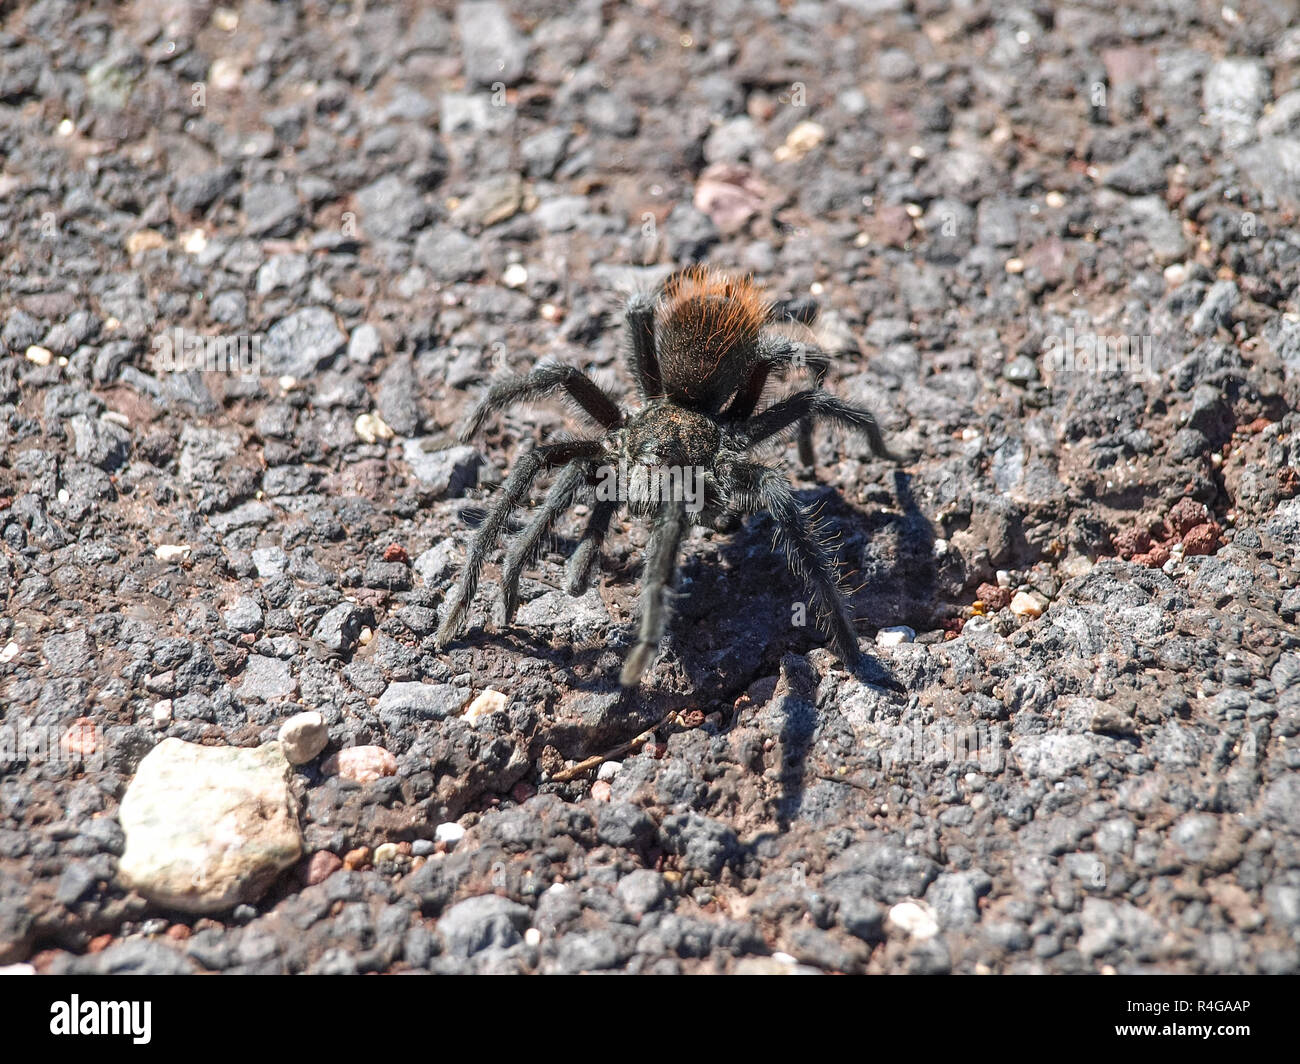 Black Tarantula. Spiders Utah, Grand Canyon. Stock Photo